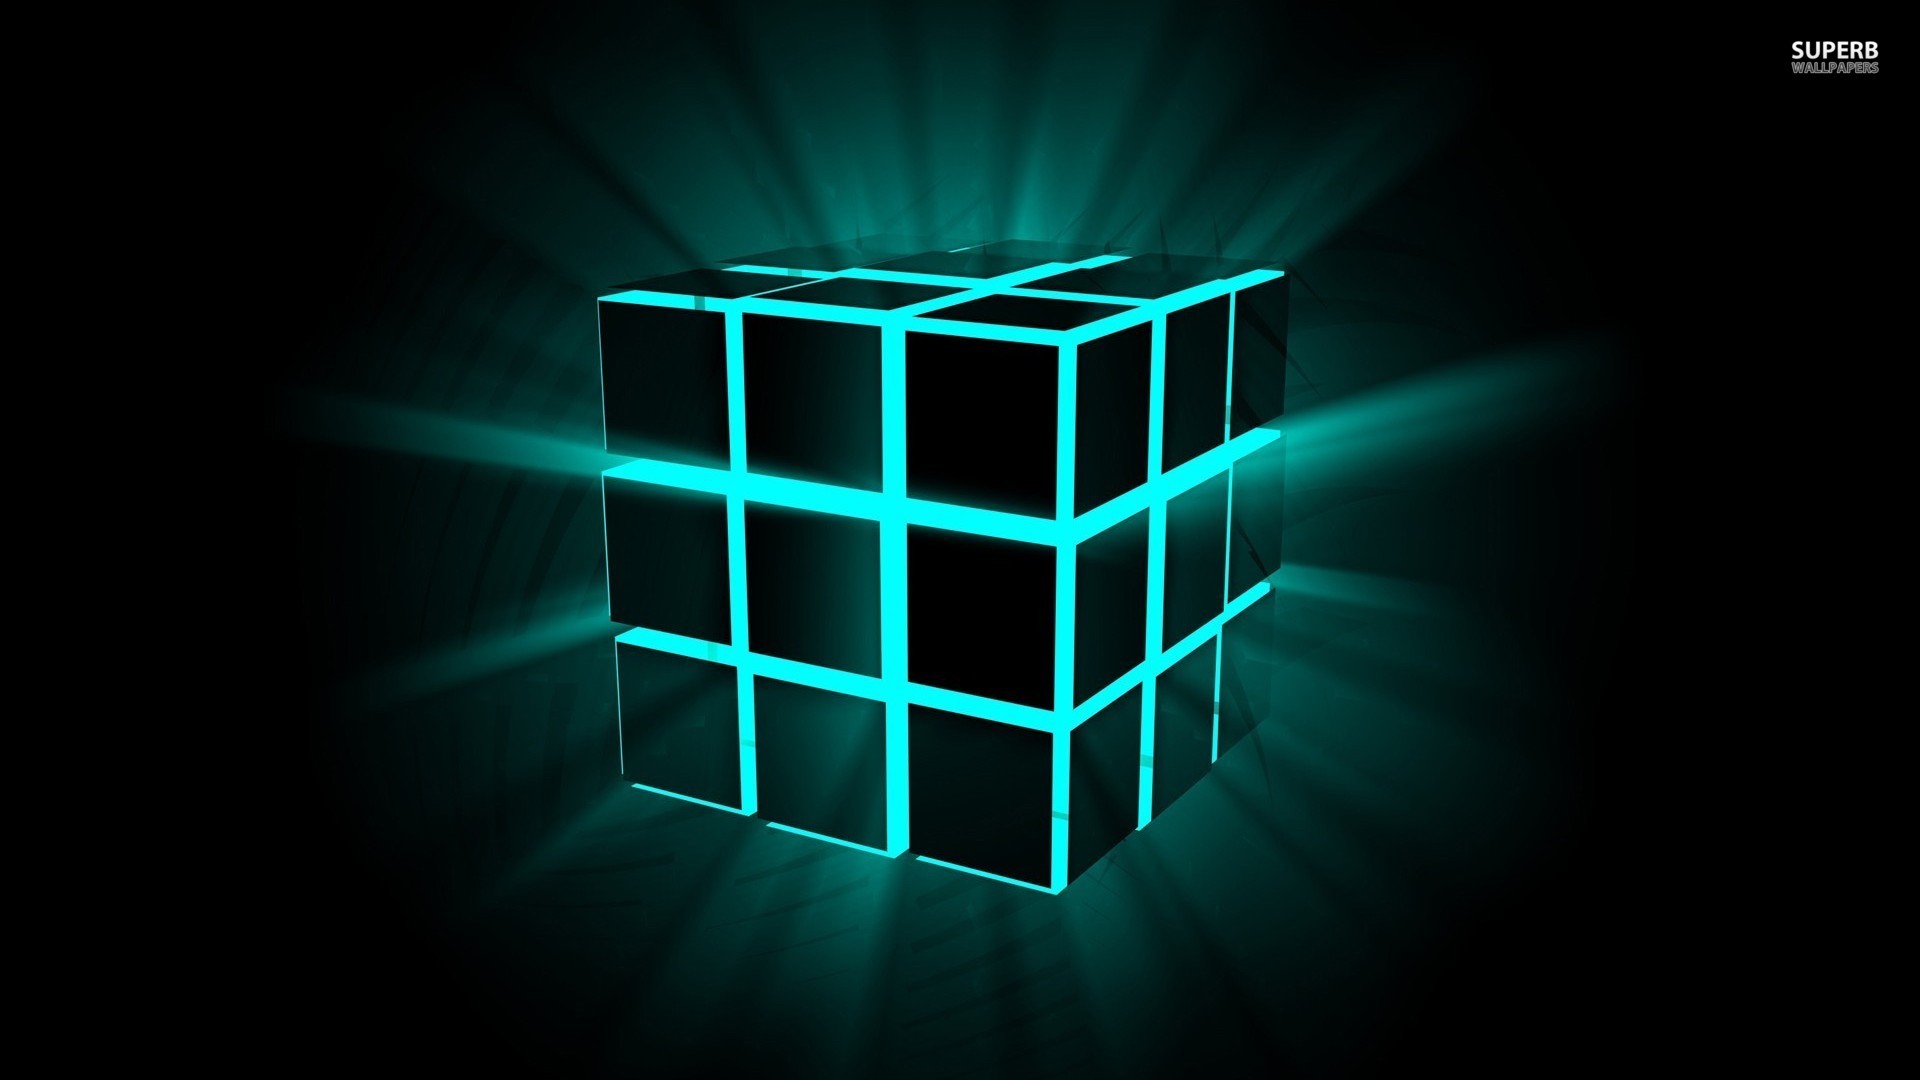 1920x1080 Neon cube wallpaper 